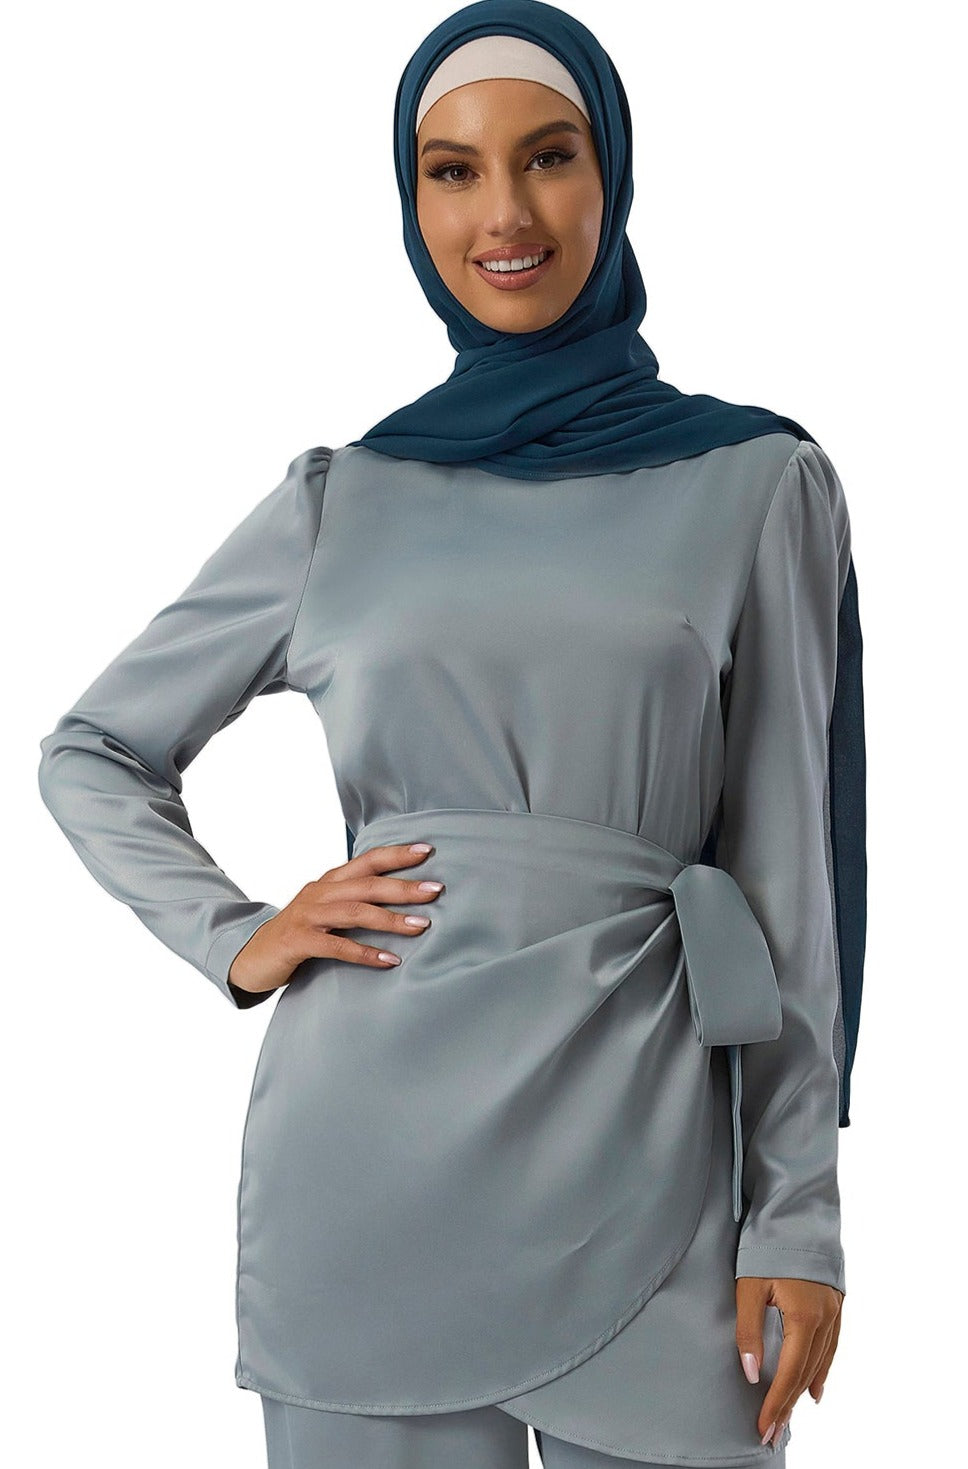 Urban Modesty - Dark Emerald Chiffon Hijab-131